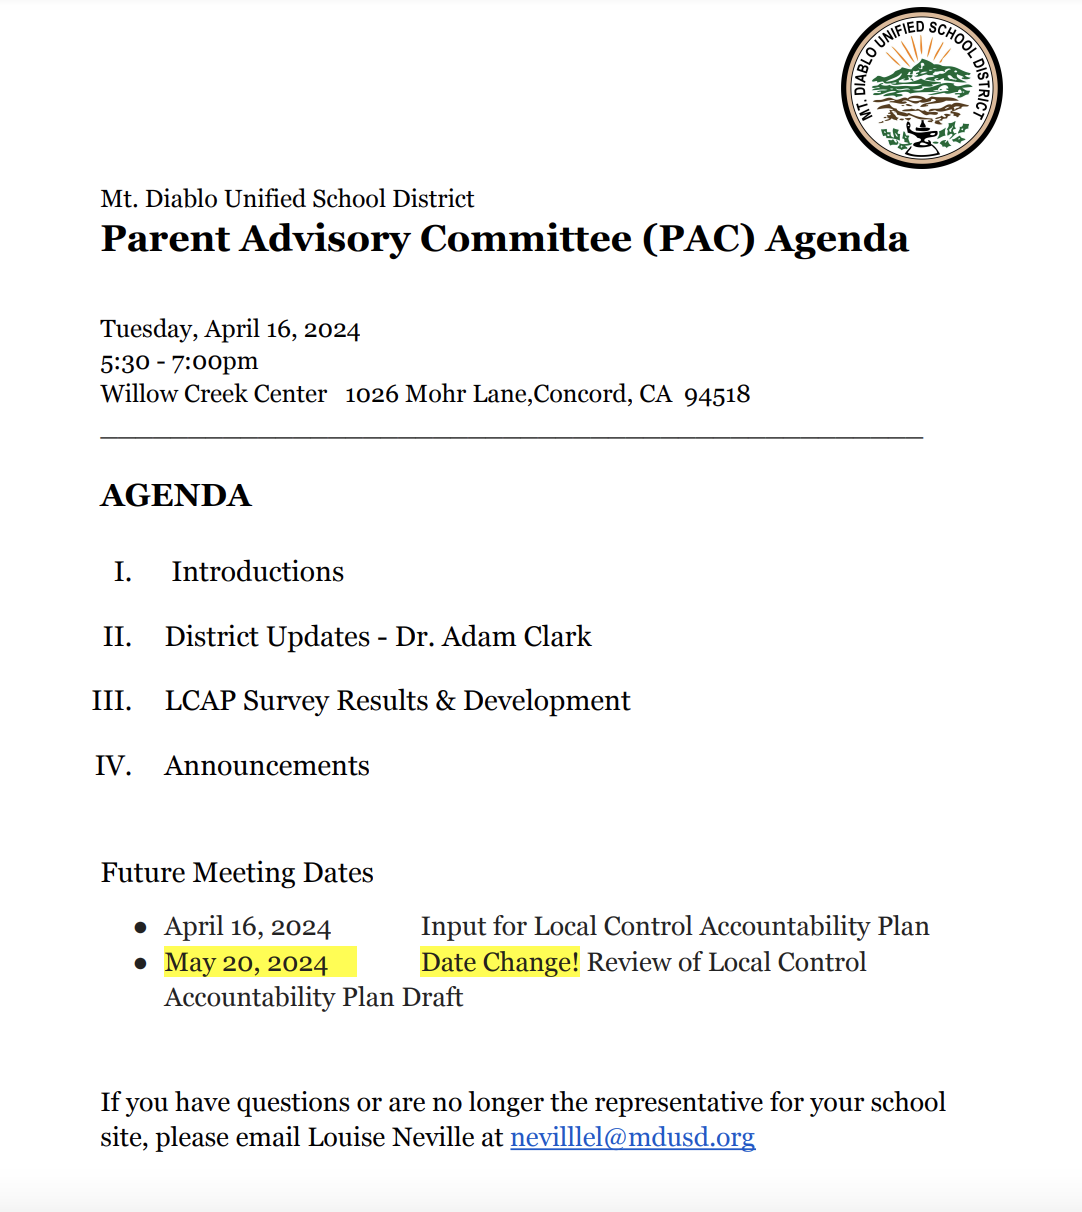 ROAP Announces Annual Accreditation School At Los Alamitos - Paulick Report